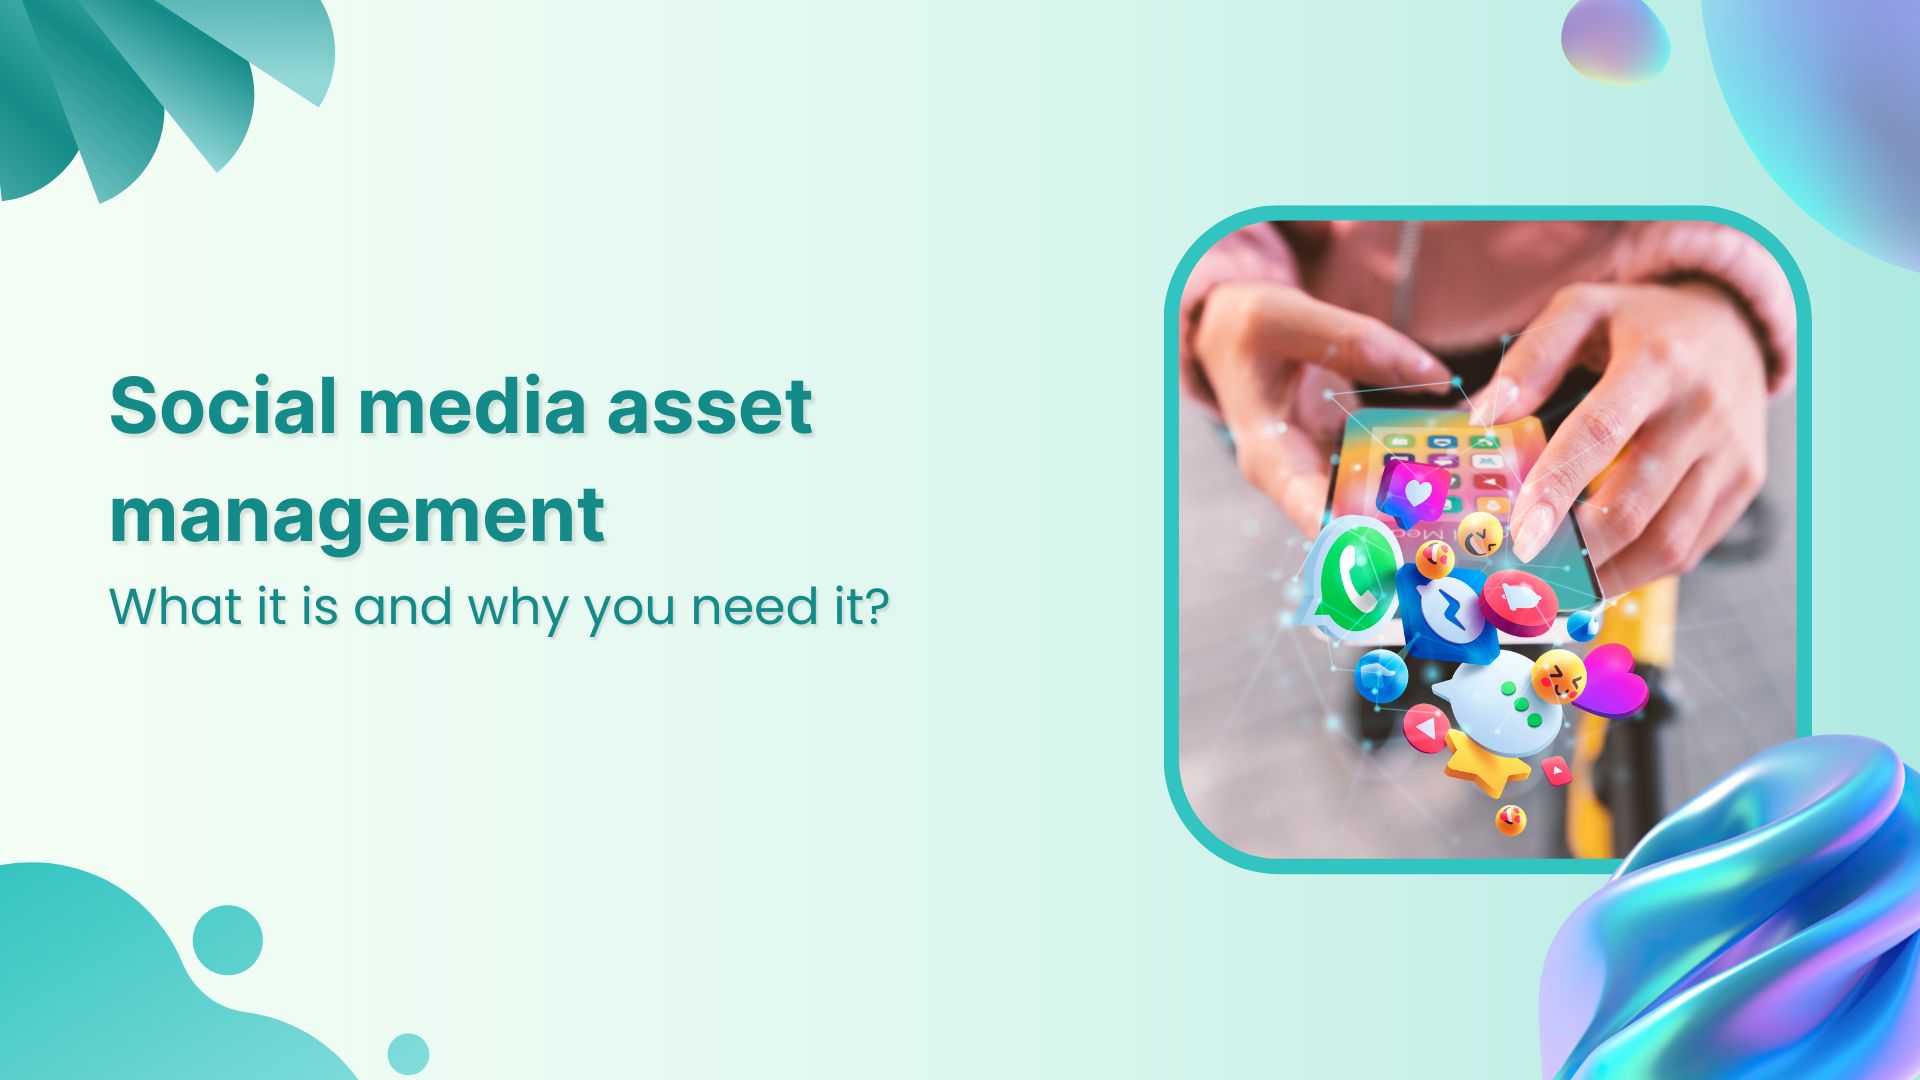 Social media asset management